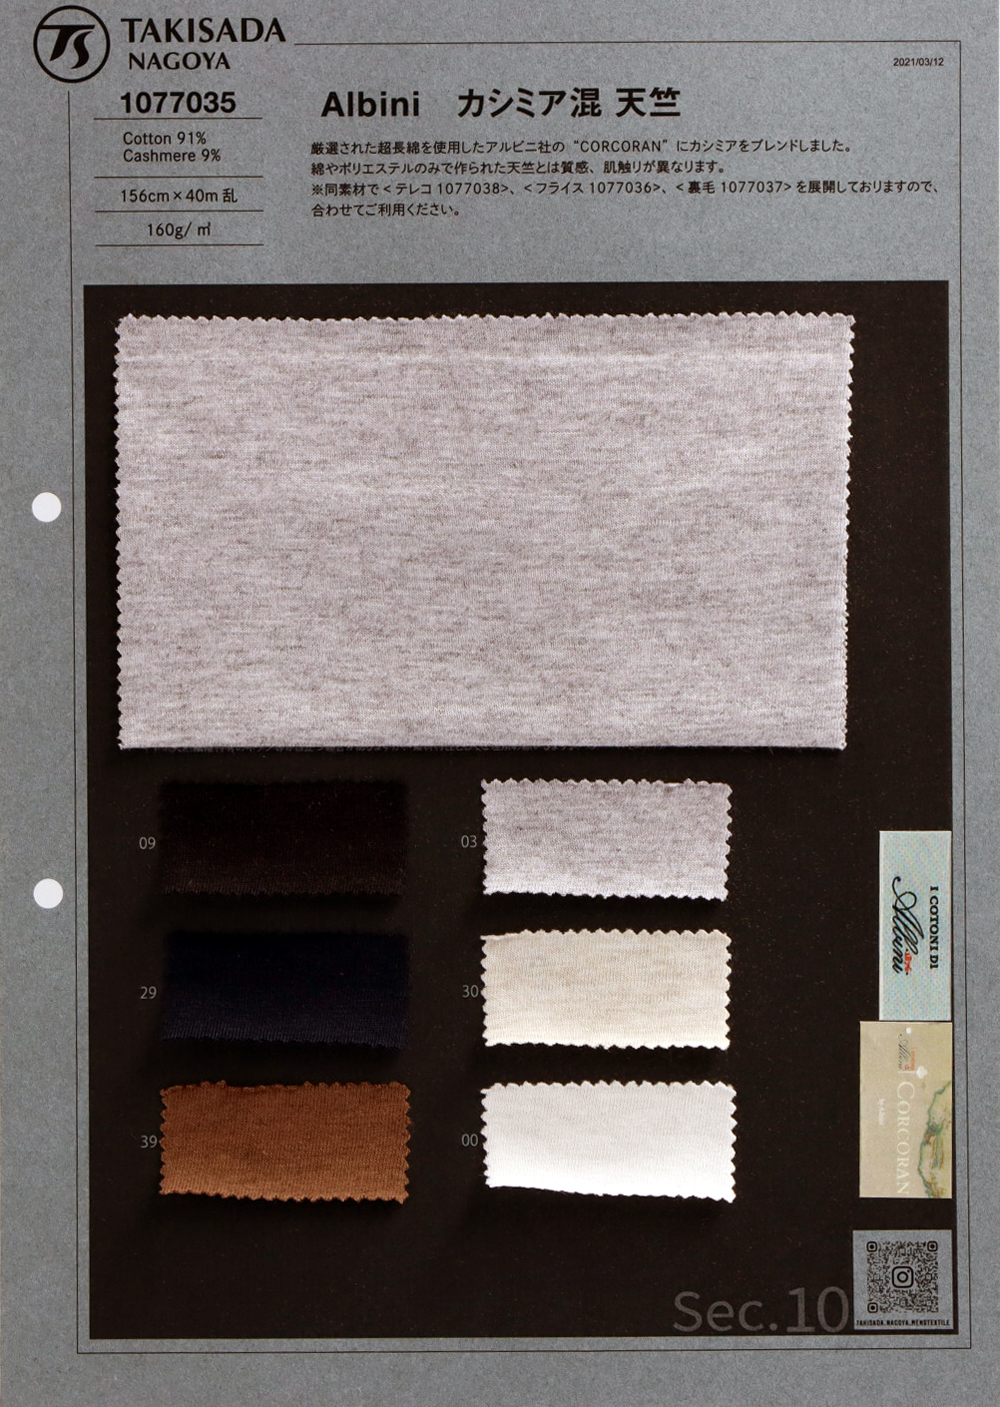 1077035 Jersey Coton Cachemire ALBINI[Fabrication De Textile] Takisada Nagoya